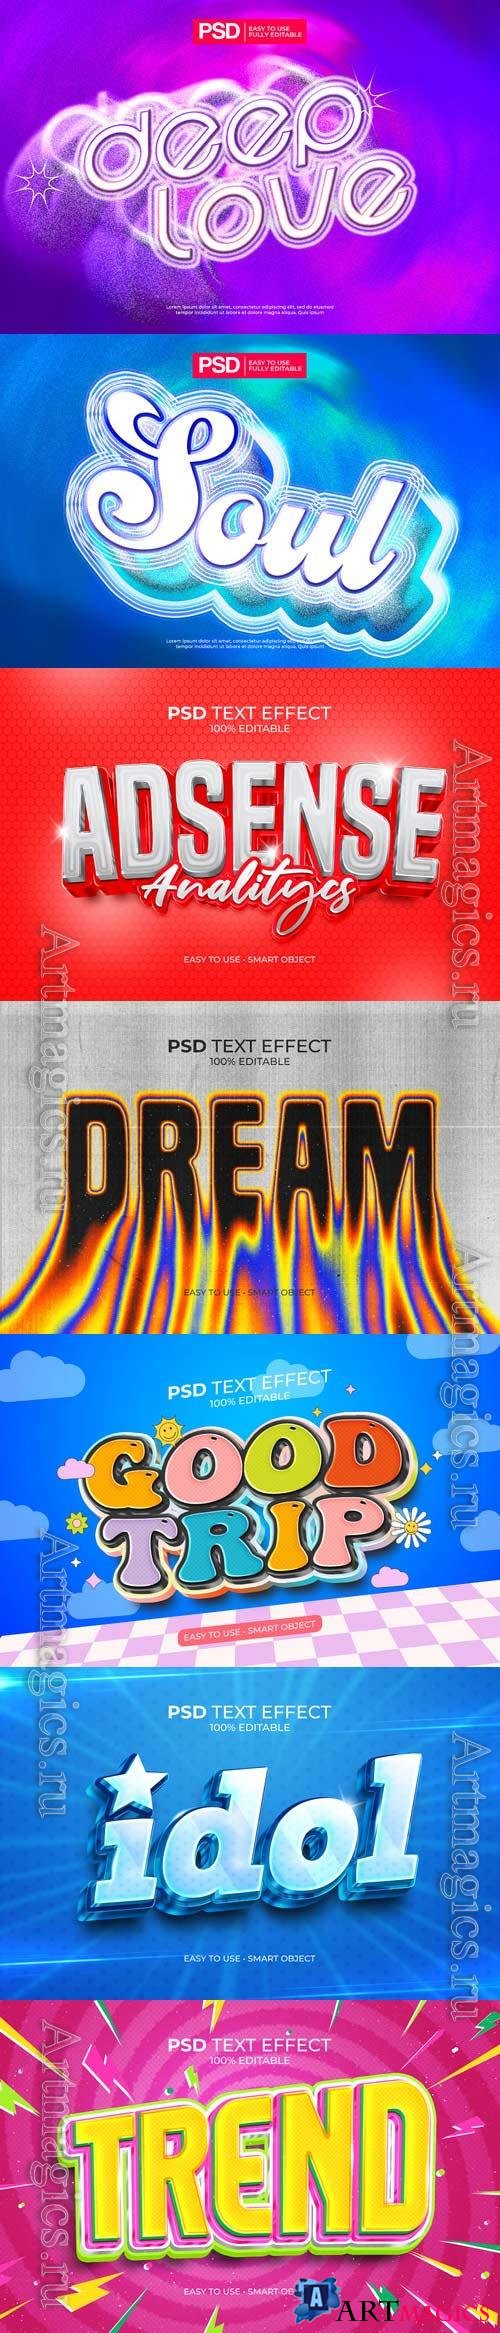 Psd style text effect editable set vol 414